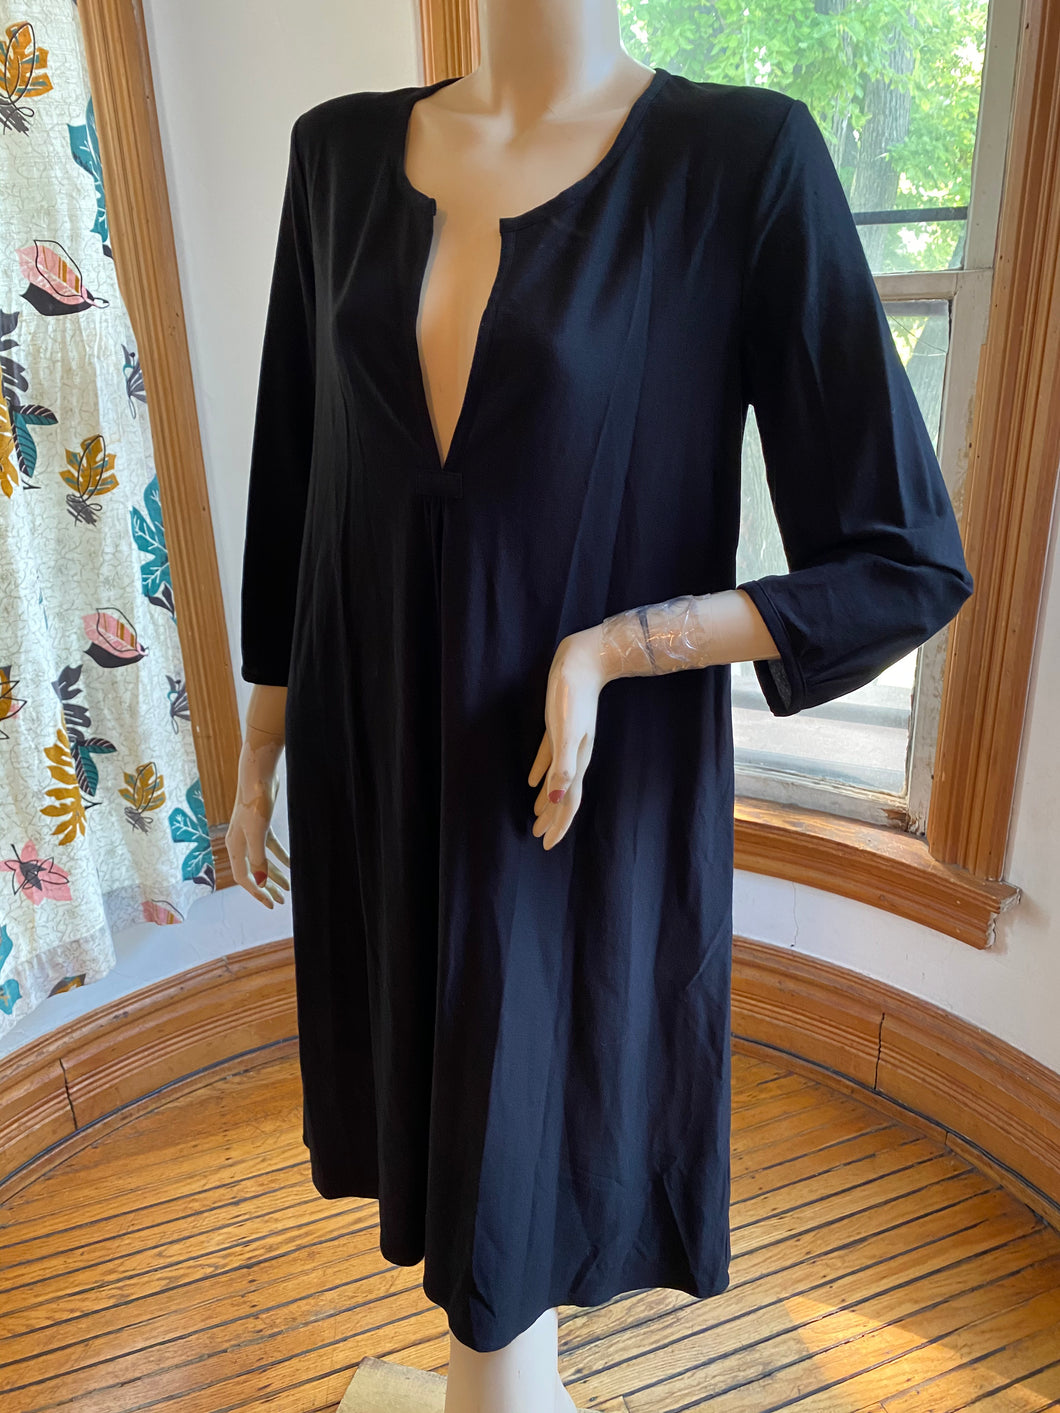 Eileen Fisher Three-Quarter Sleeve Black Rayon Blend Dress, size M